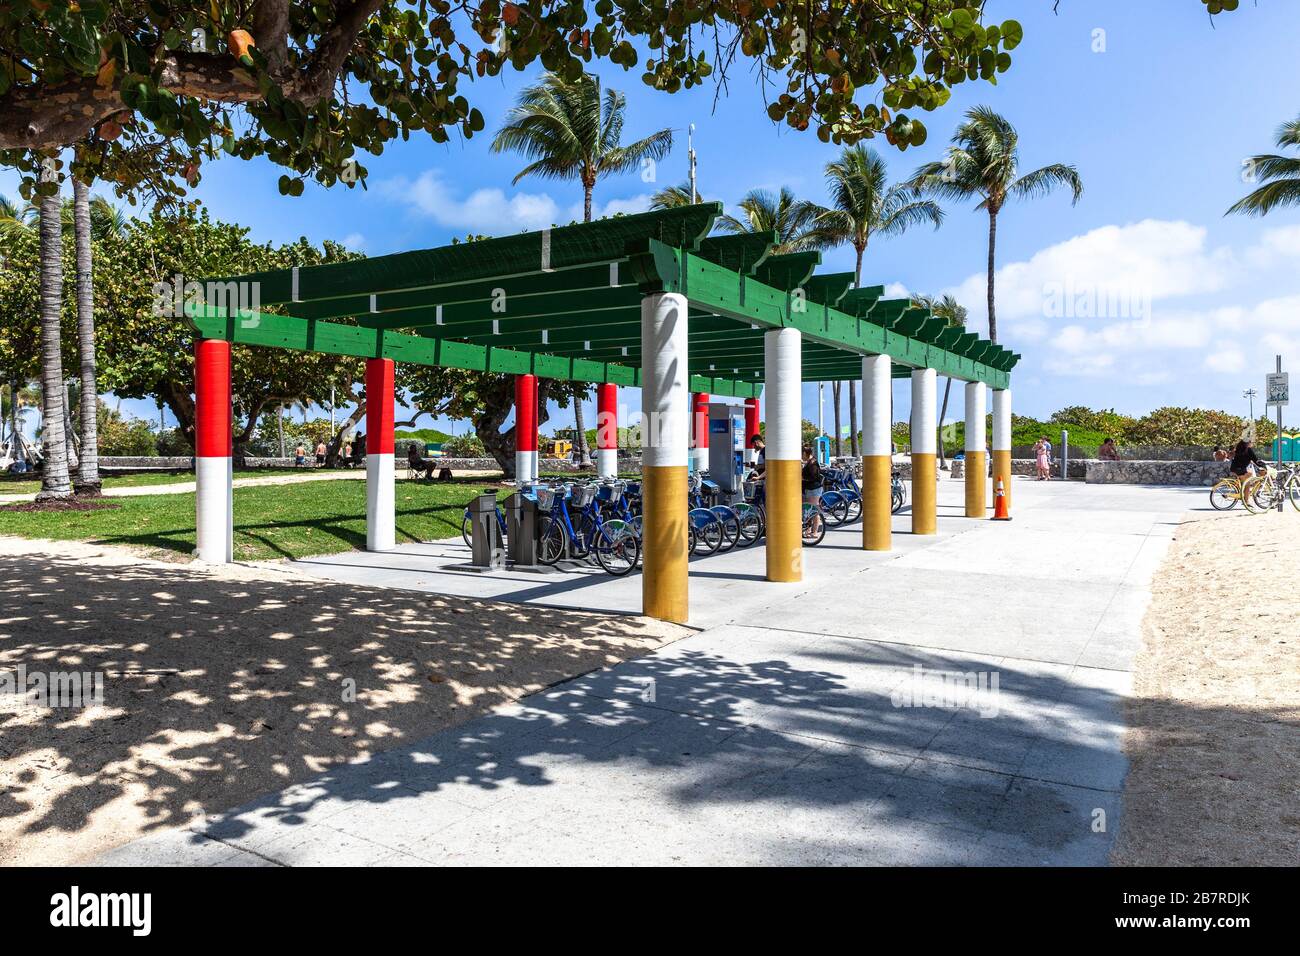 A colourful rental bicycle shelter, South Beach, Miami Beach, Florida, USA. Stock Photo